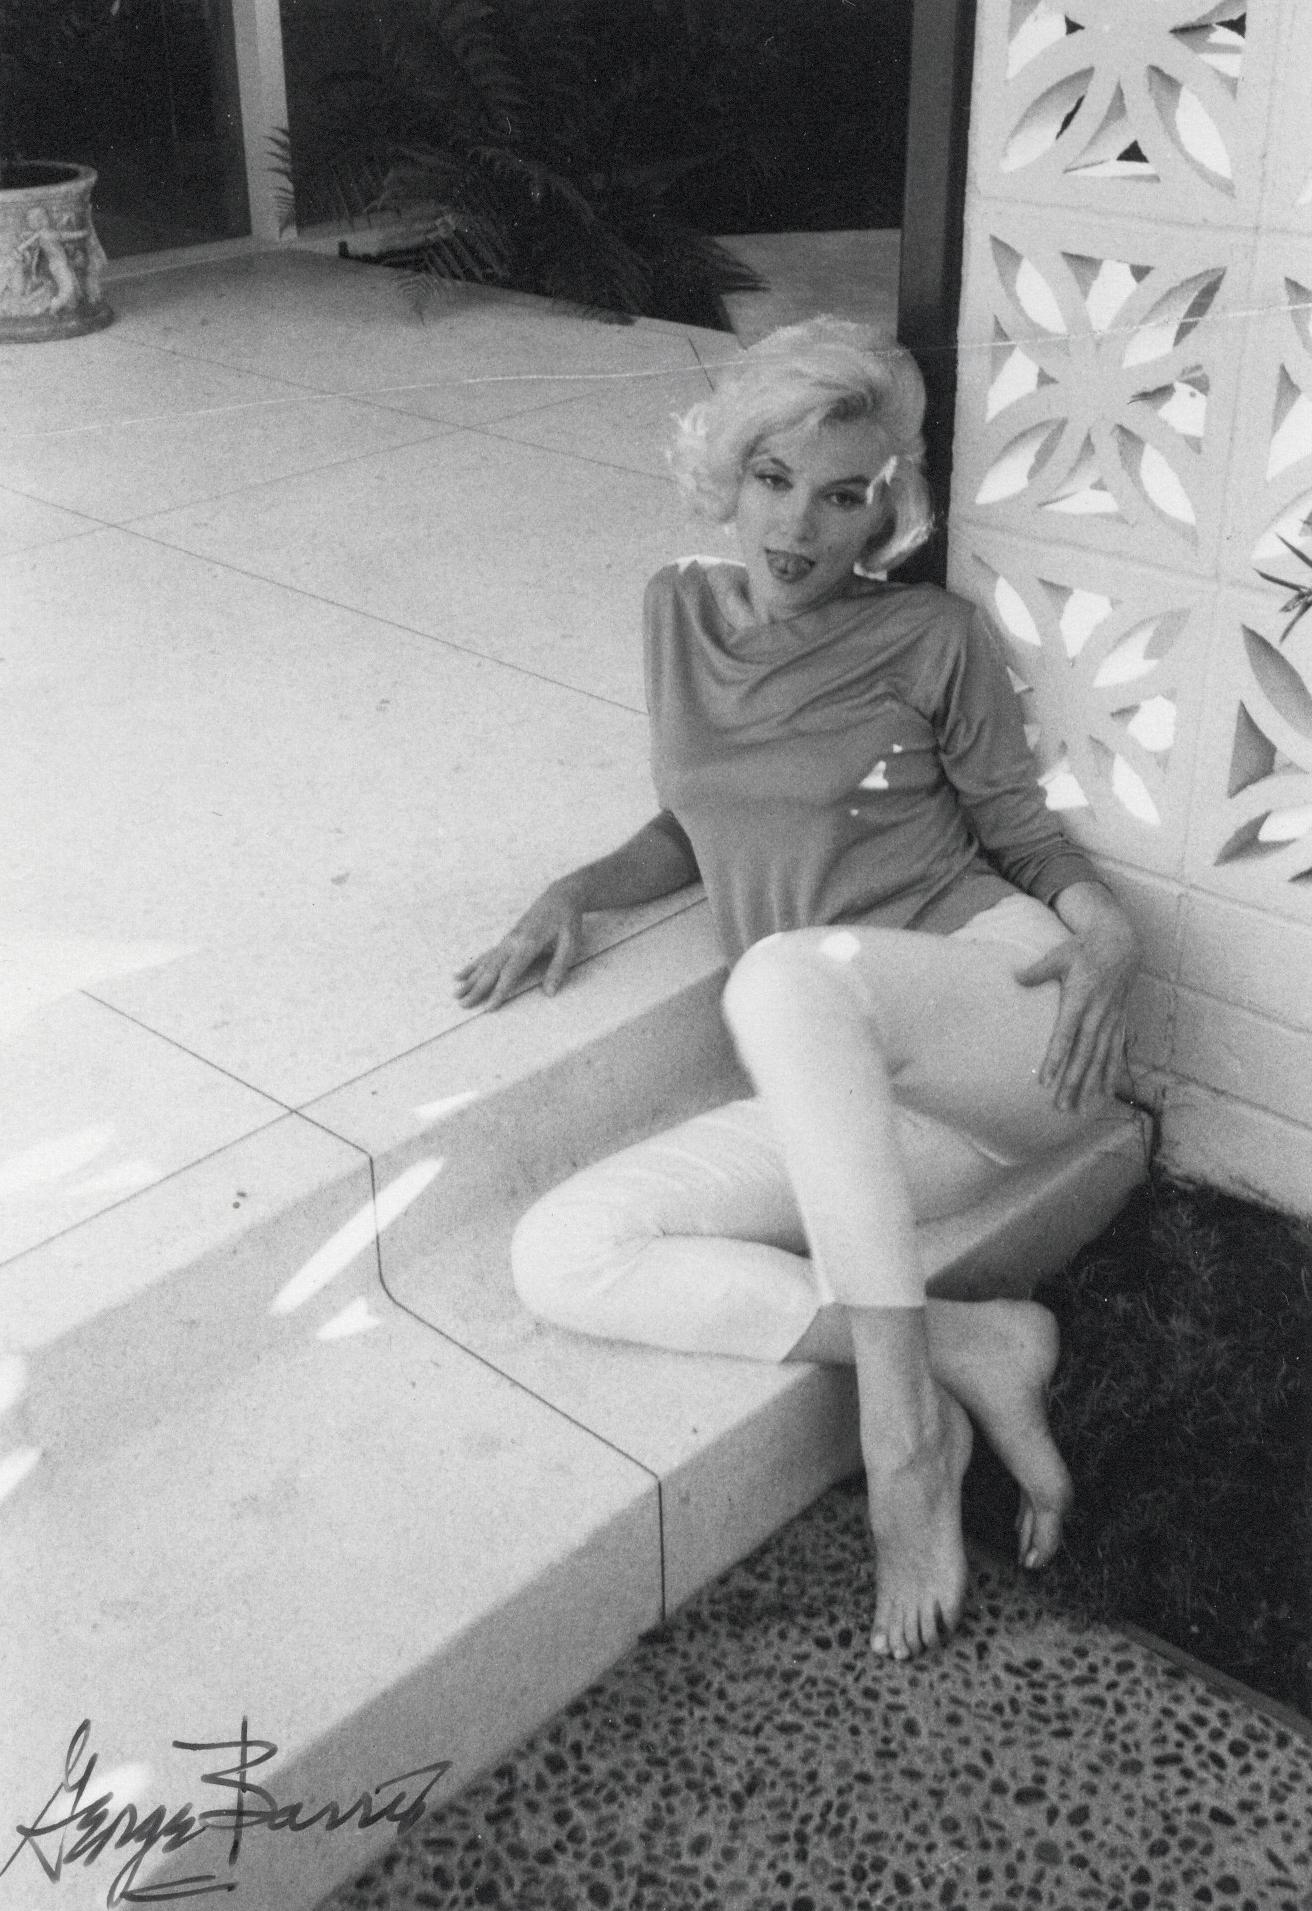 George Barris Portrait Photograph - Marilyn Monroe Barefoot Vintage Original Photograph